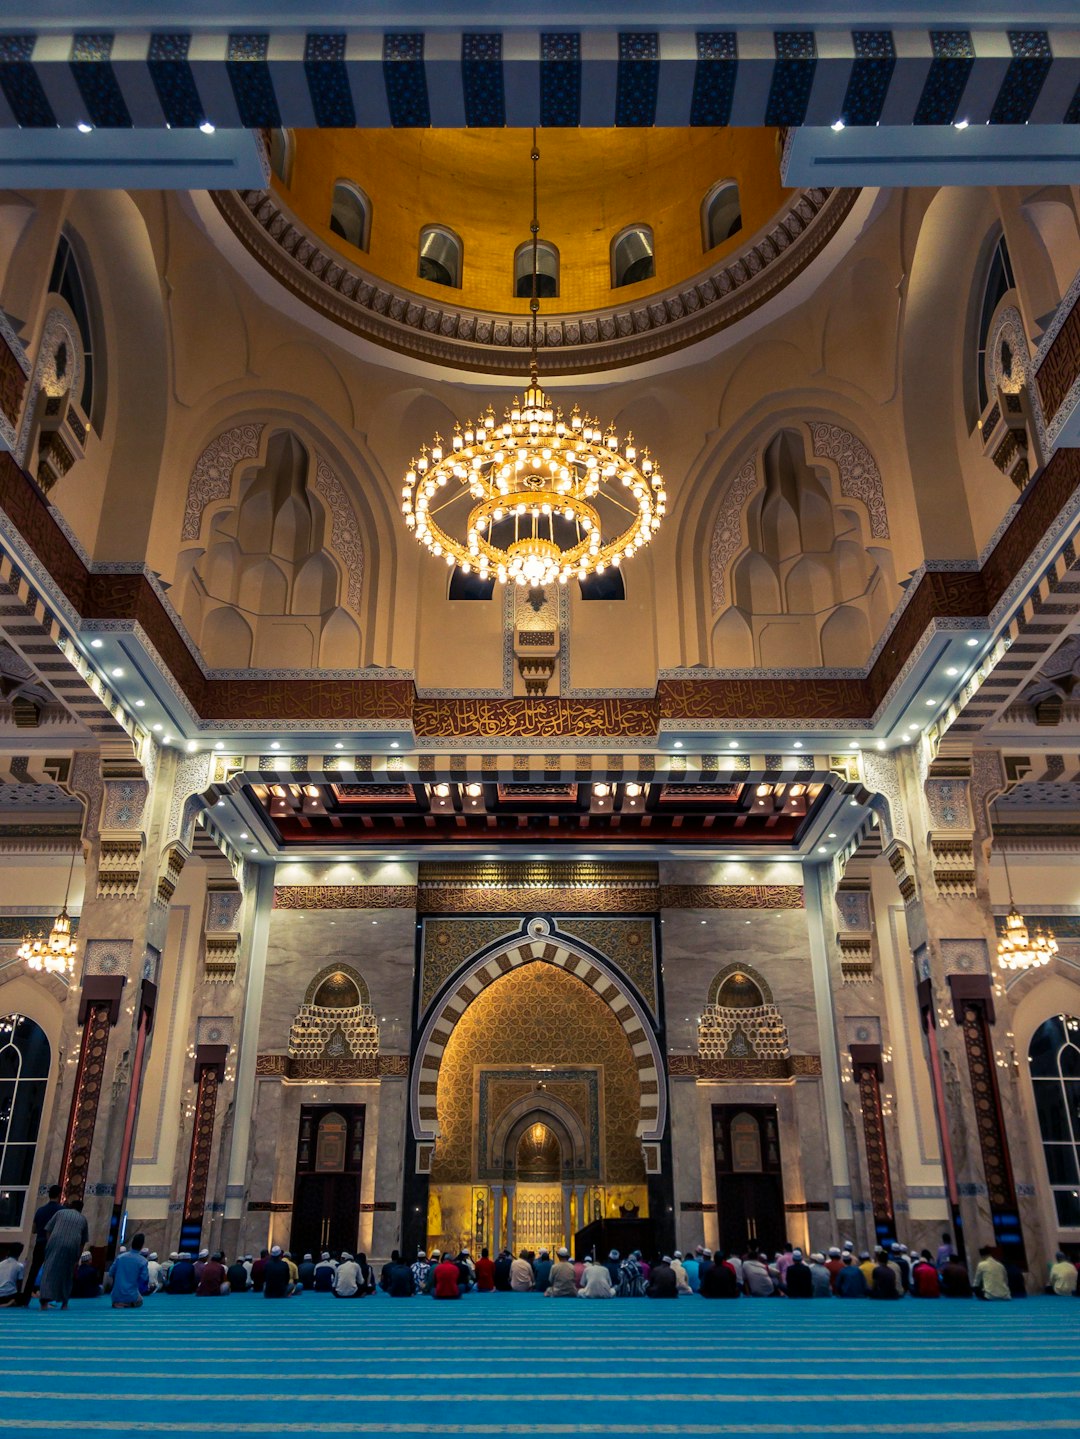 Place of worship photo spot Masjid Sri Sendayan Federal Territory of Kuala Lumpur